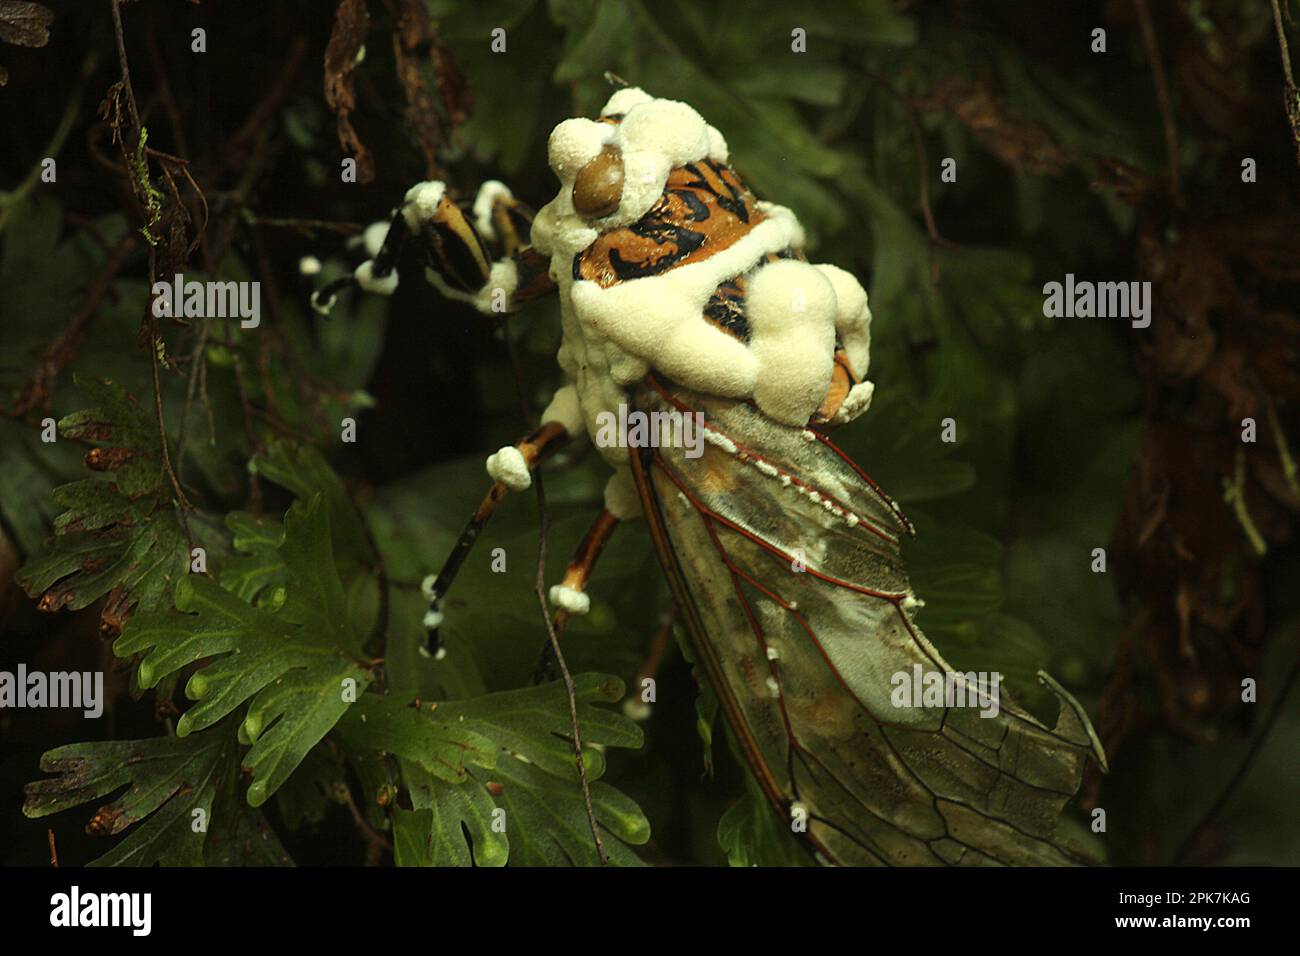 Endoparasitic icing sugar fungus (Beauvaria sp.) on cicada Stock Photo